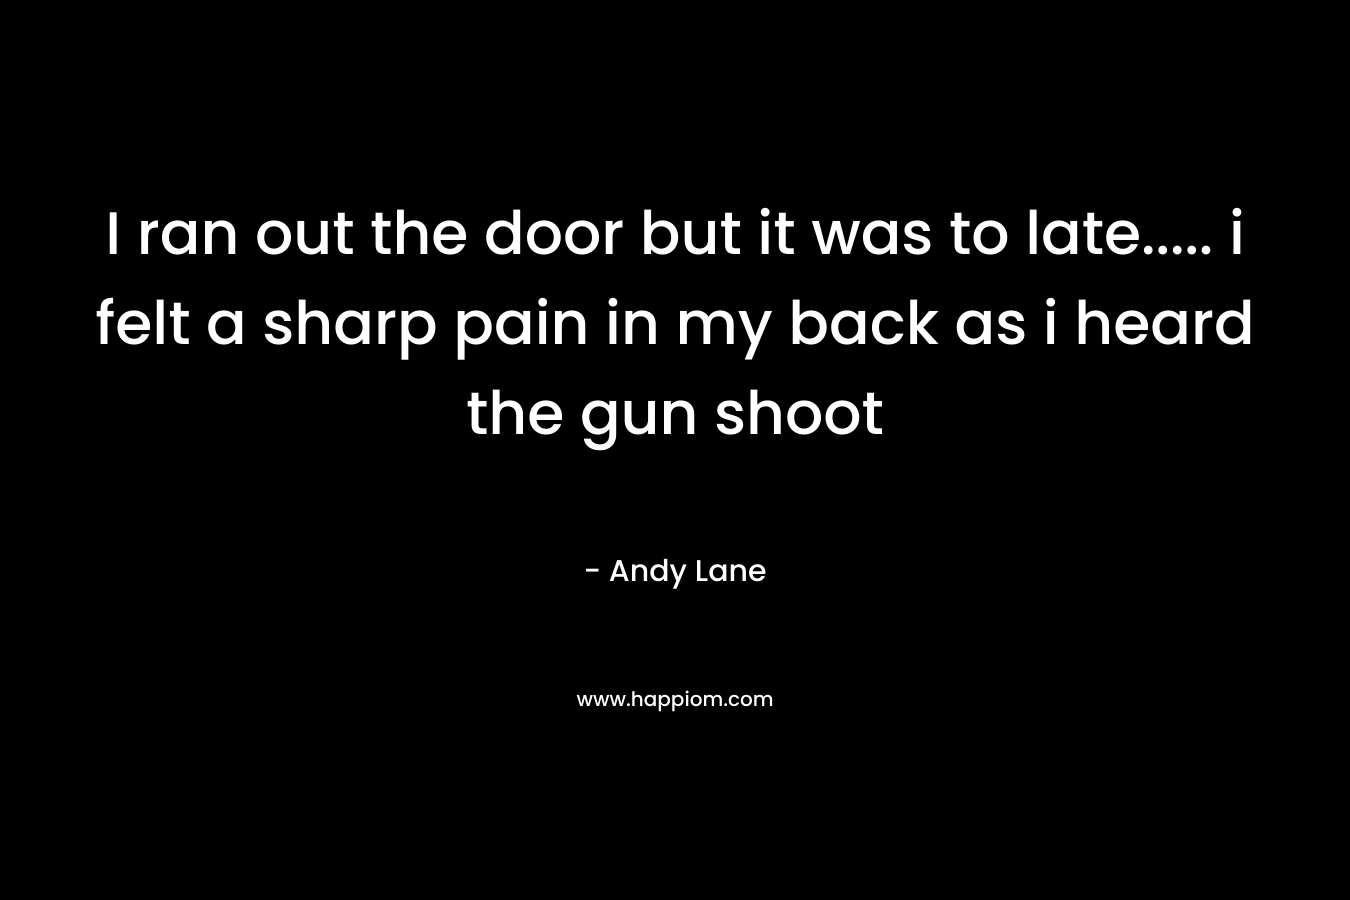 I ran out the door but it was to late..... i felt a sharp pain in my back as i heard the gun shoot